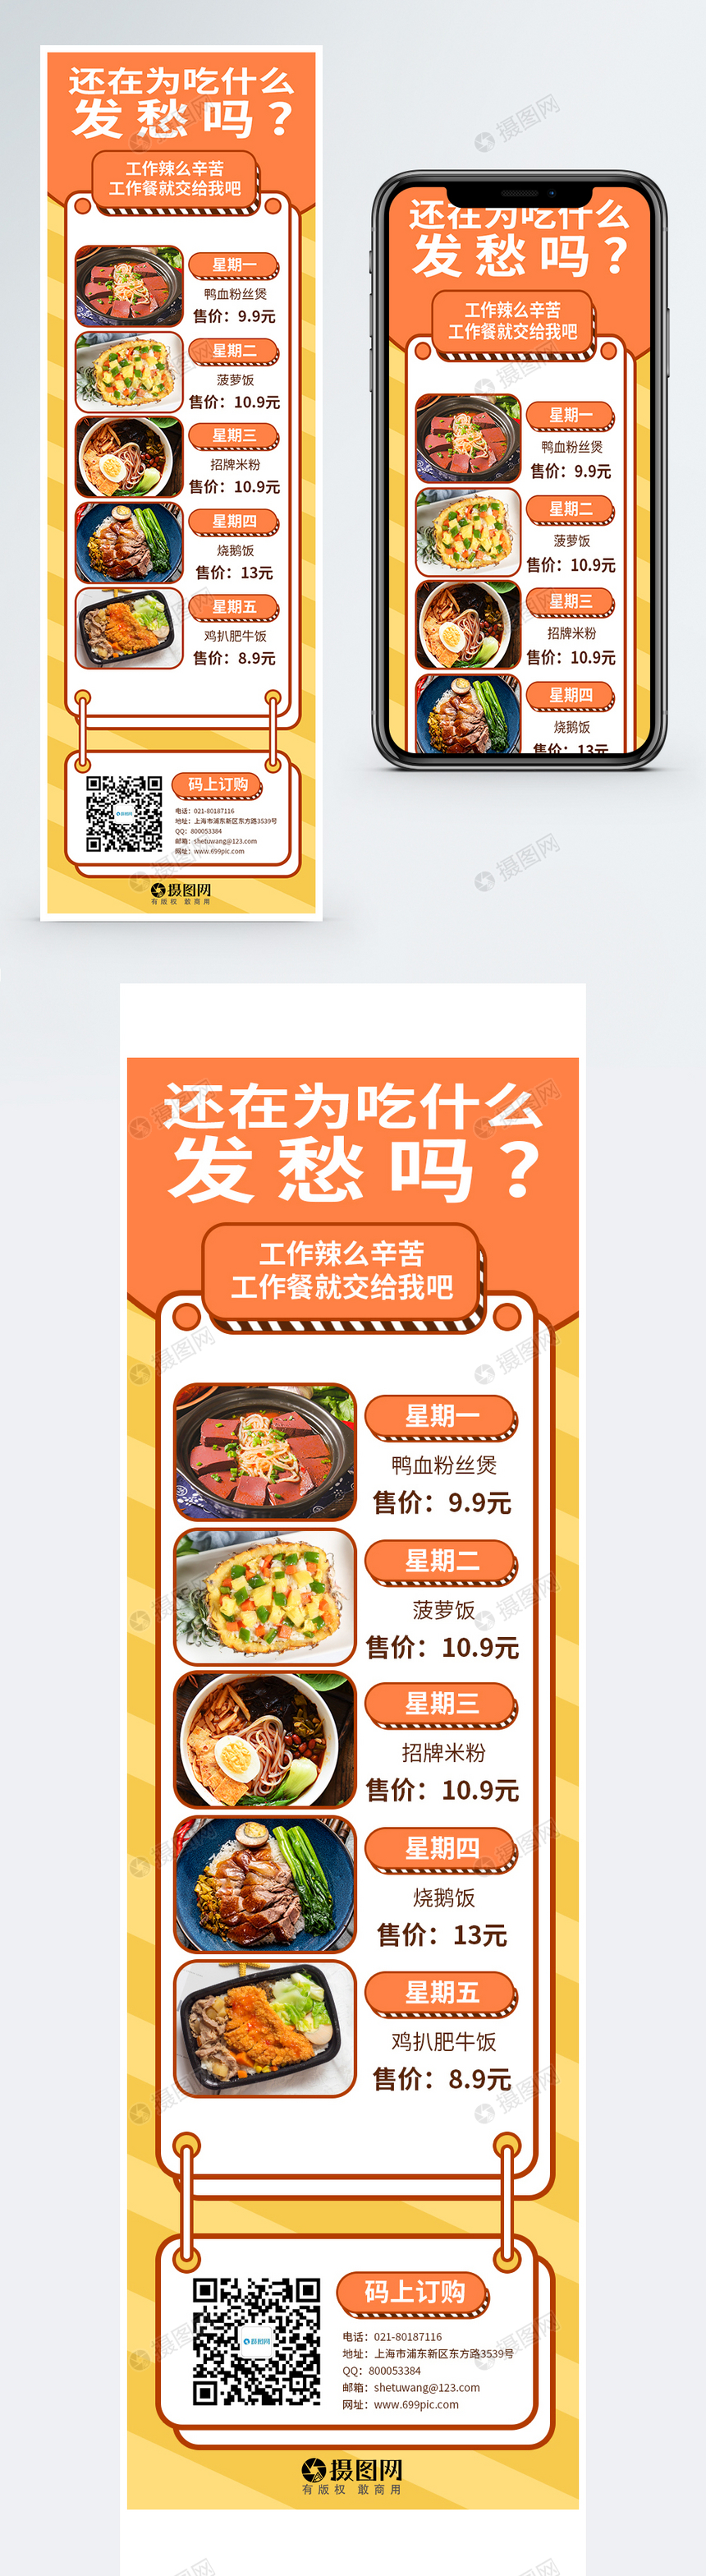 H5餐饮美食工作餐套餐菜单营销宣传长图图片